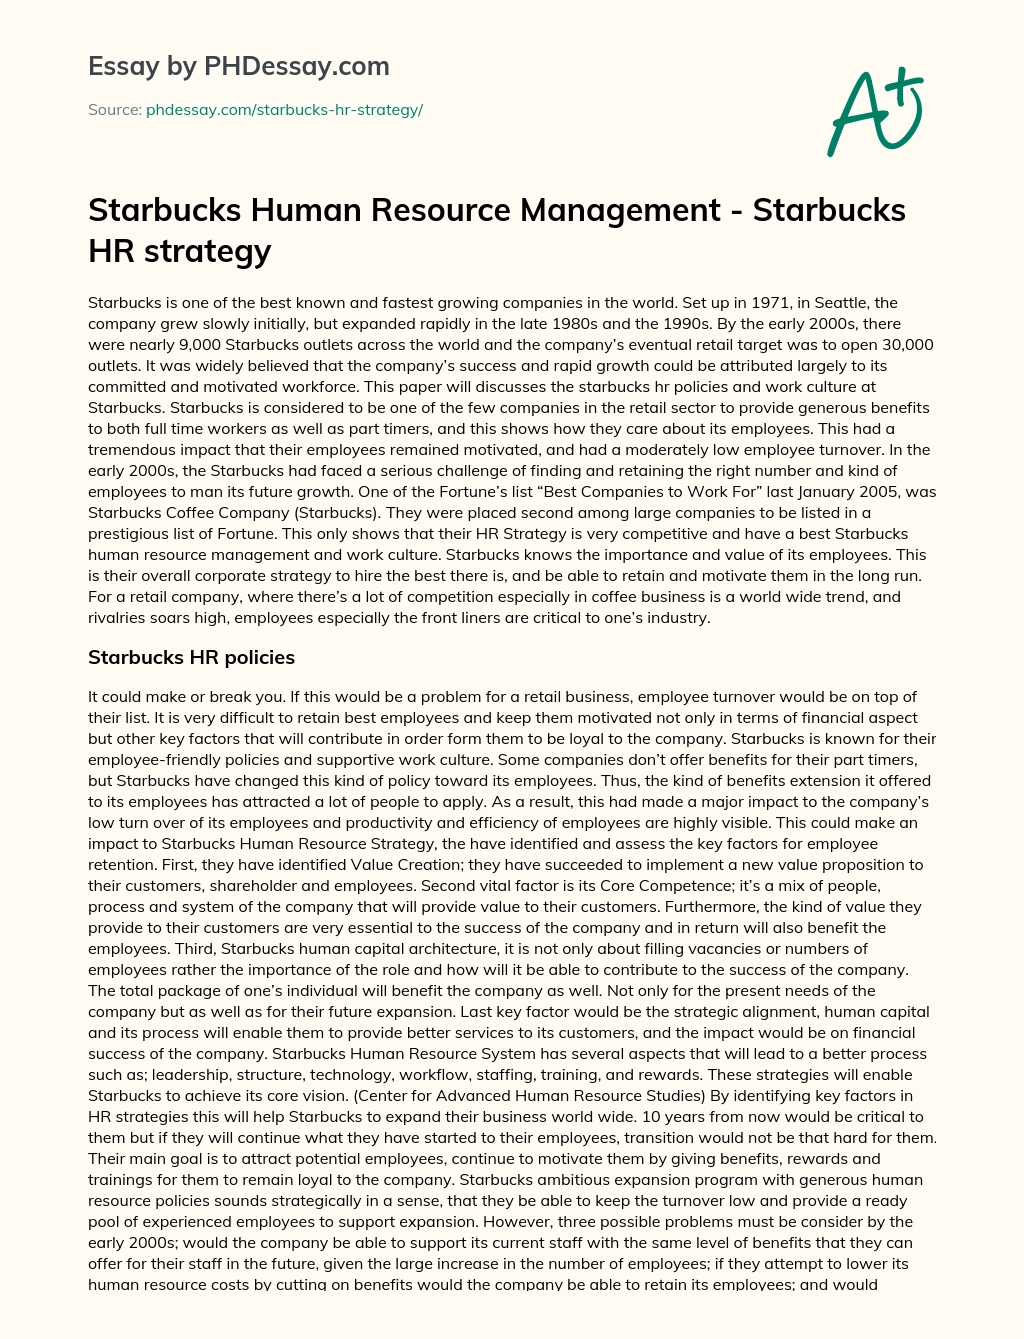 Starbucks Human Resource Management – Starbucks HR strategy essay